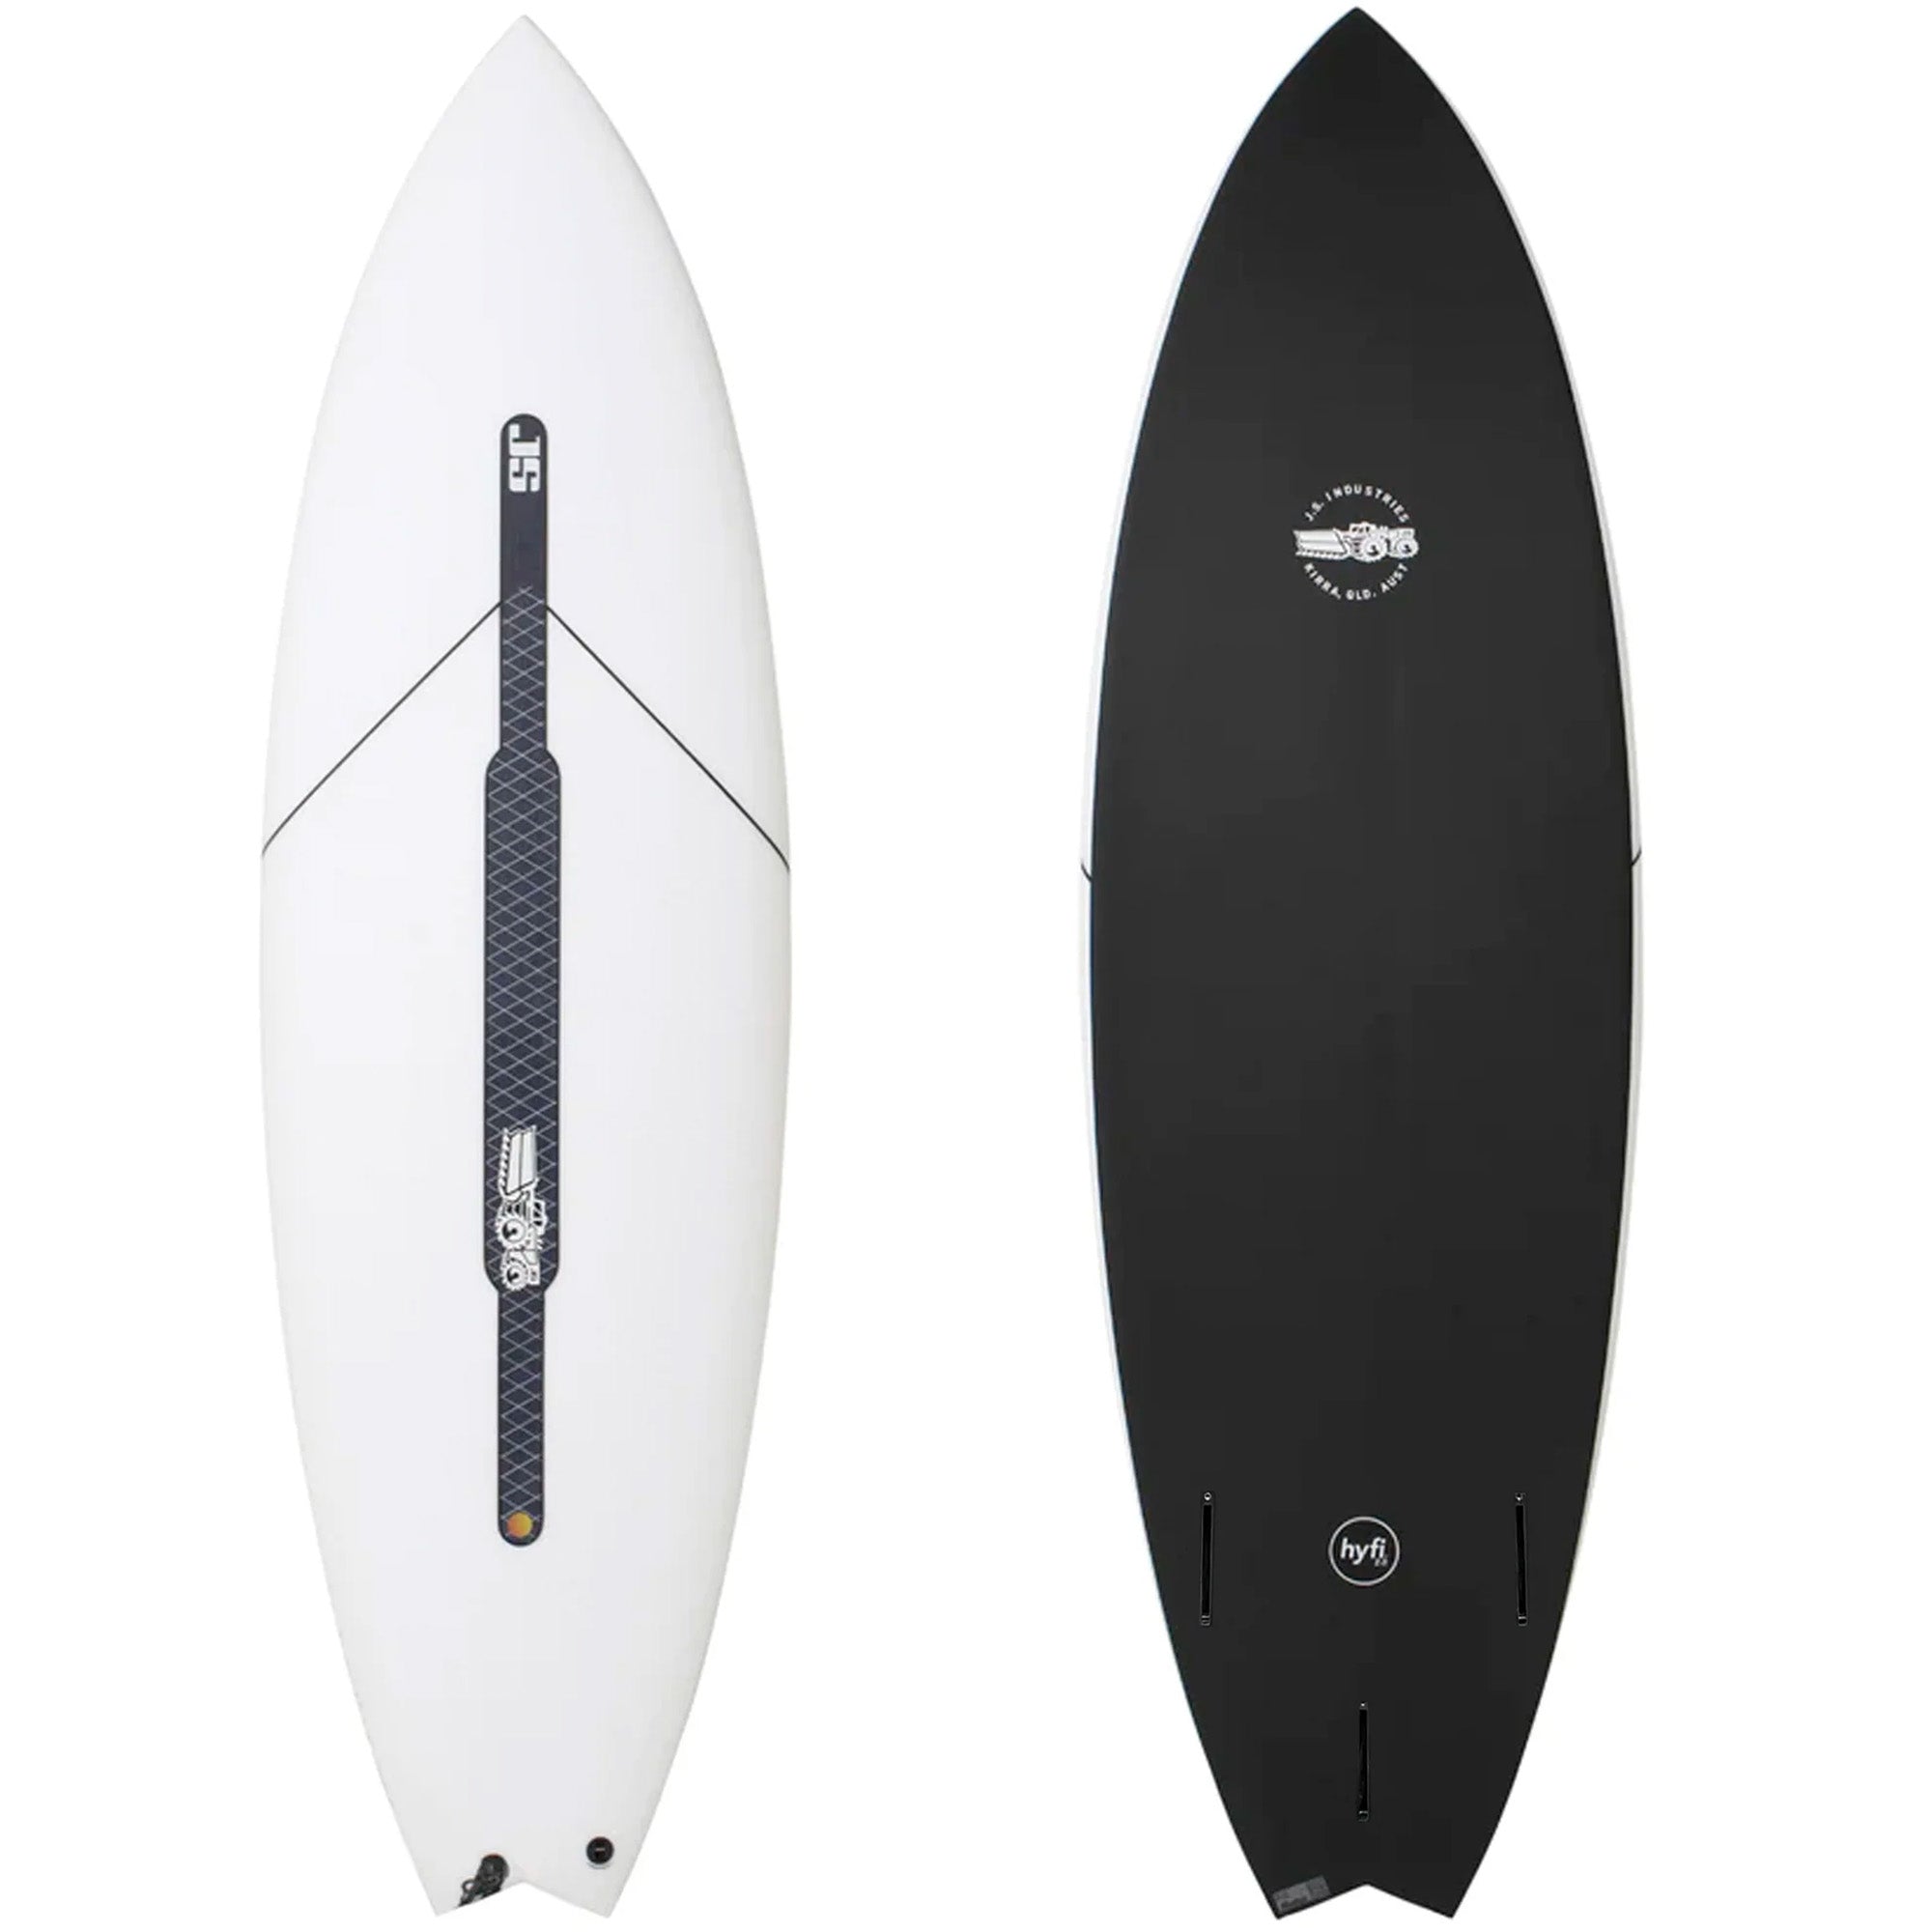 JS Black Baron 2.1 HYFI Surfboard - Futures